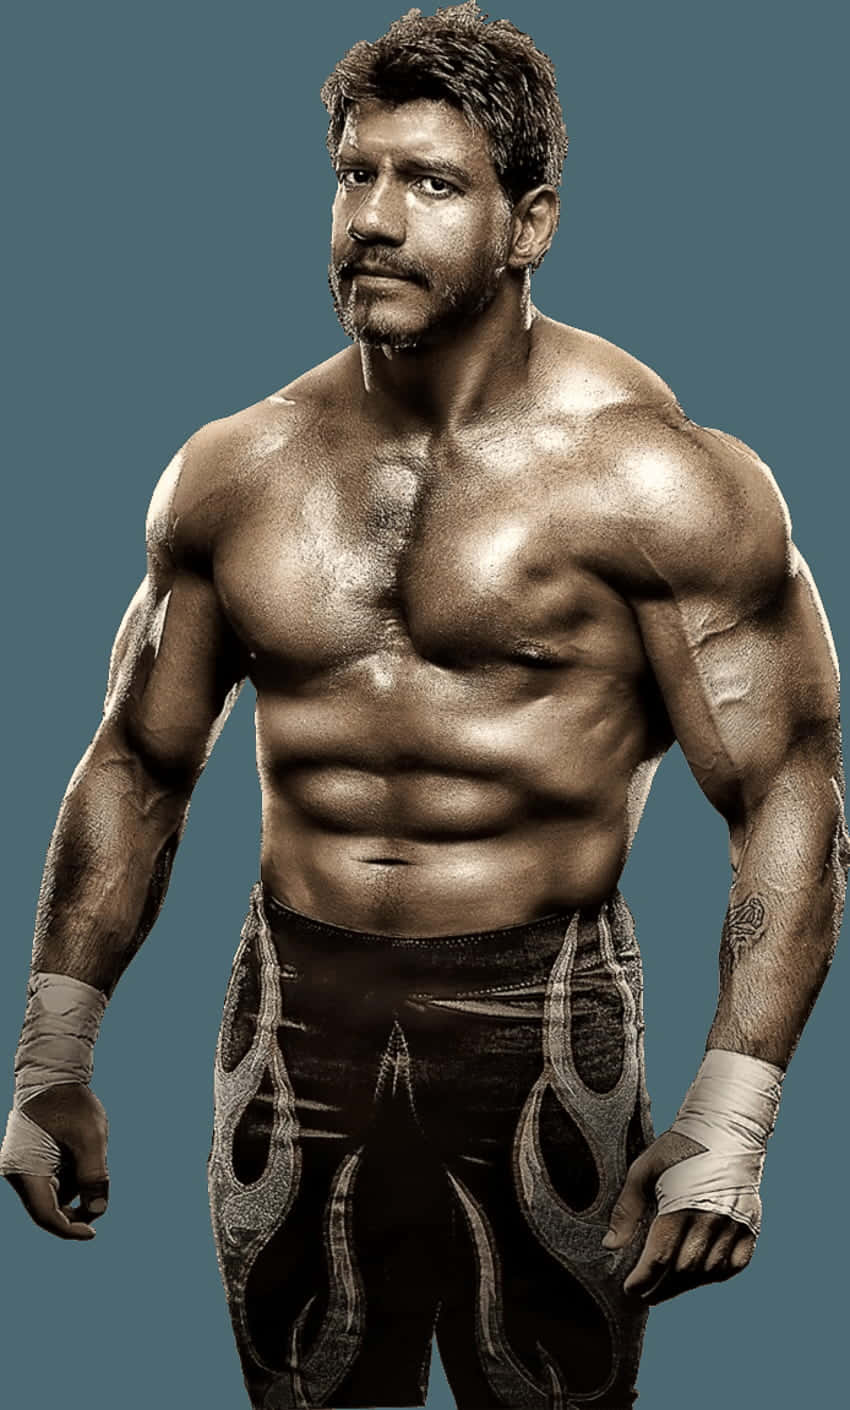 Eddie Guerrero Wwe Wrestler Photo Wallpaper